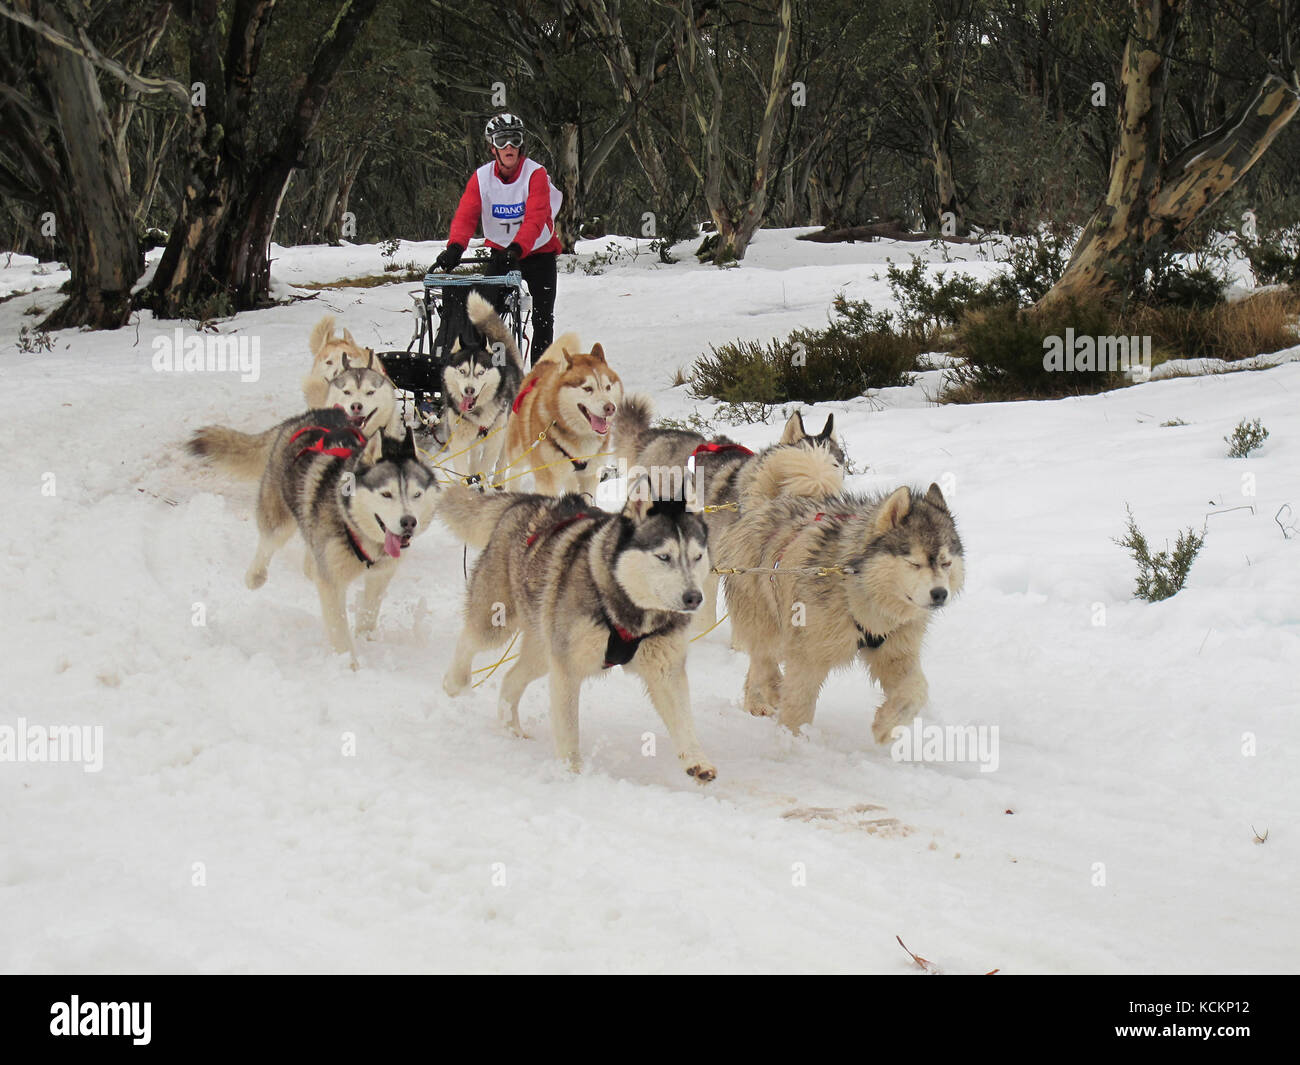 Sled dog racing, Dinner Plain near Mount Hotham, northeastern Victoria, Australia Stock Photo